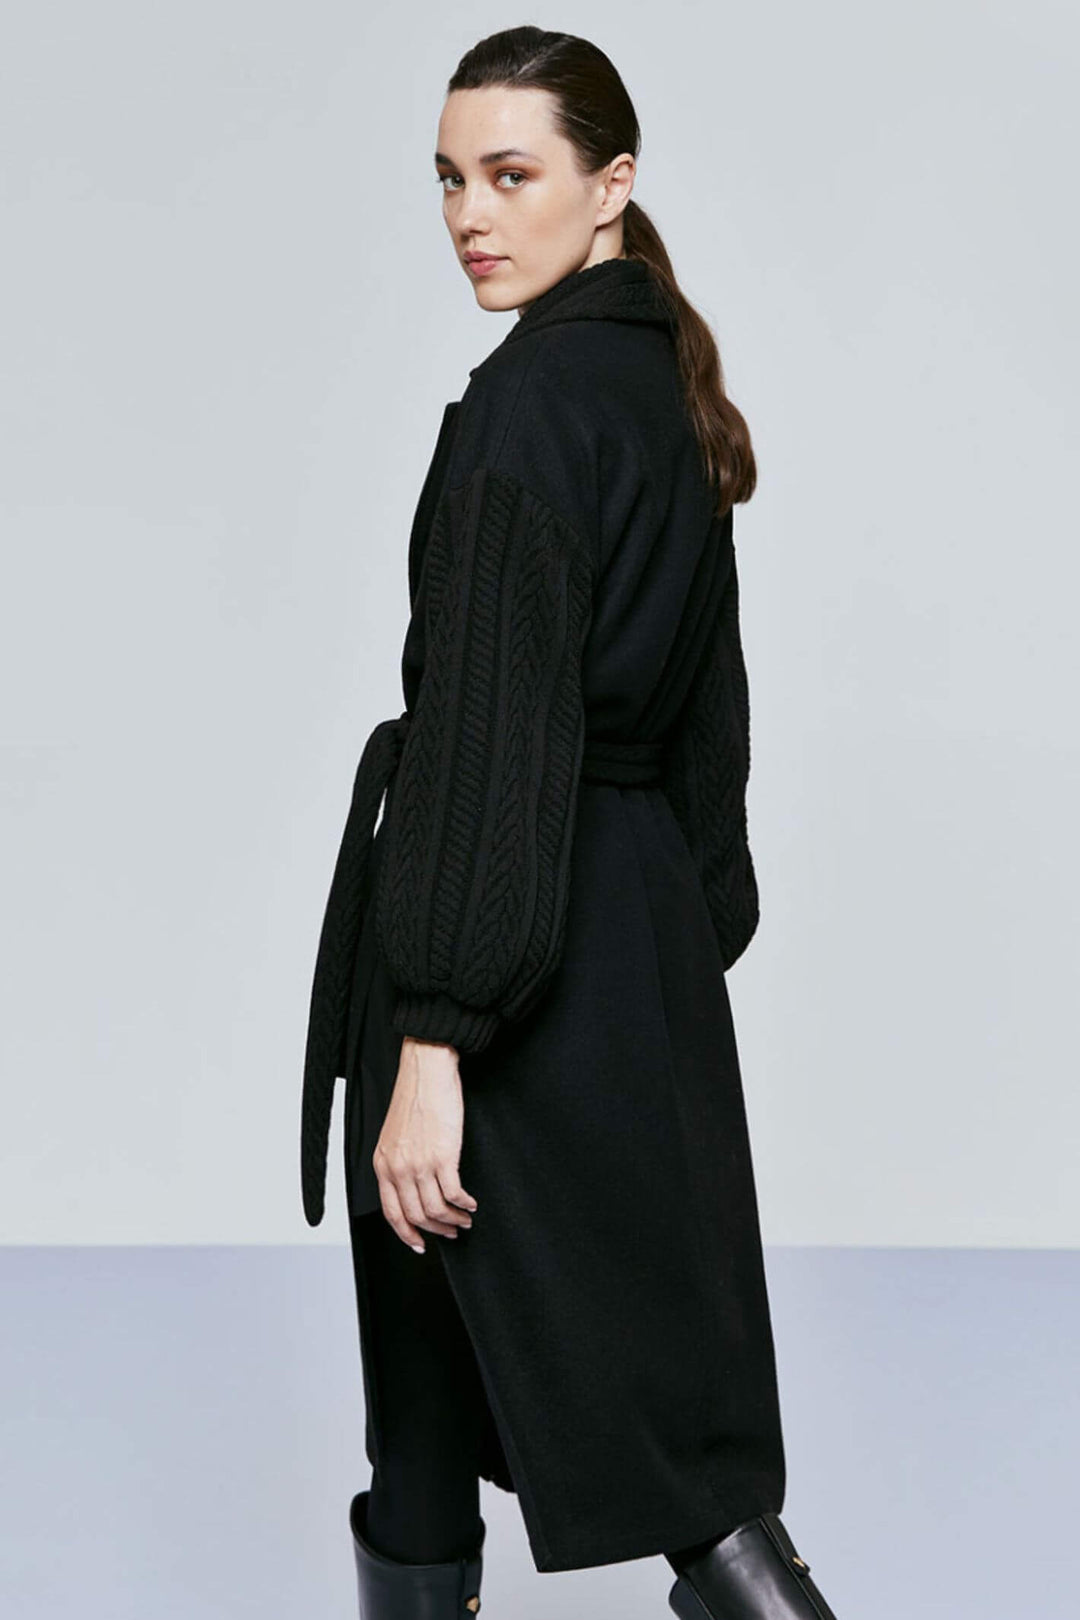 Access Fashion 9033 Black Crochet Detail Coat